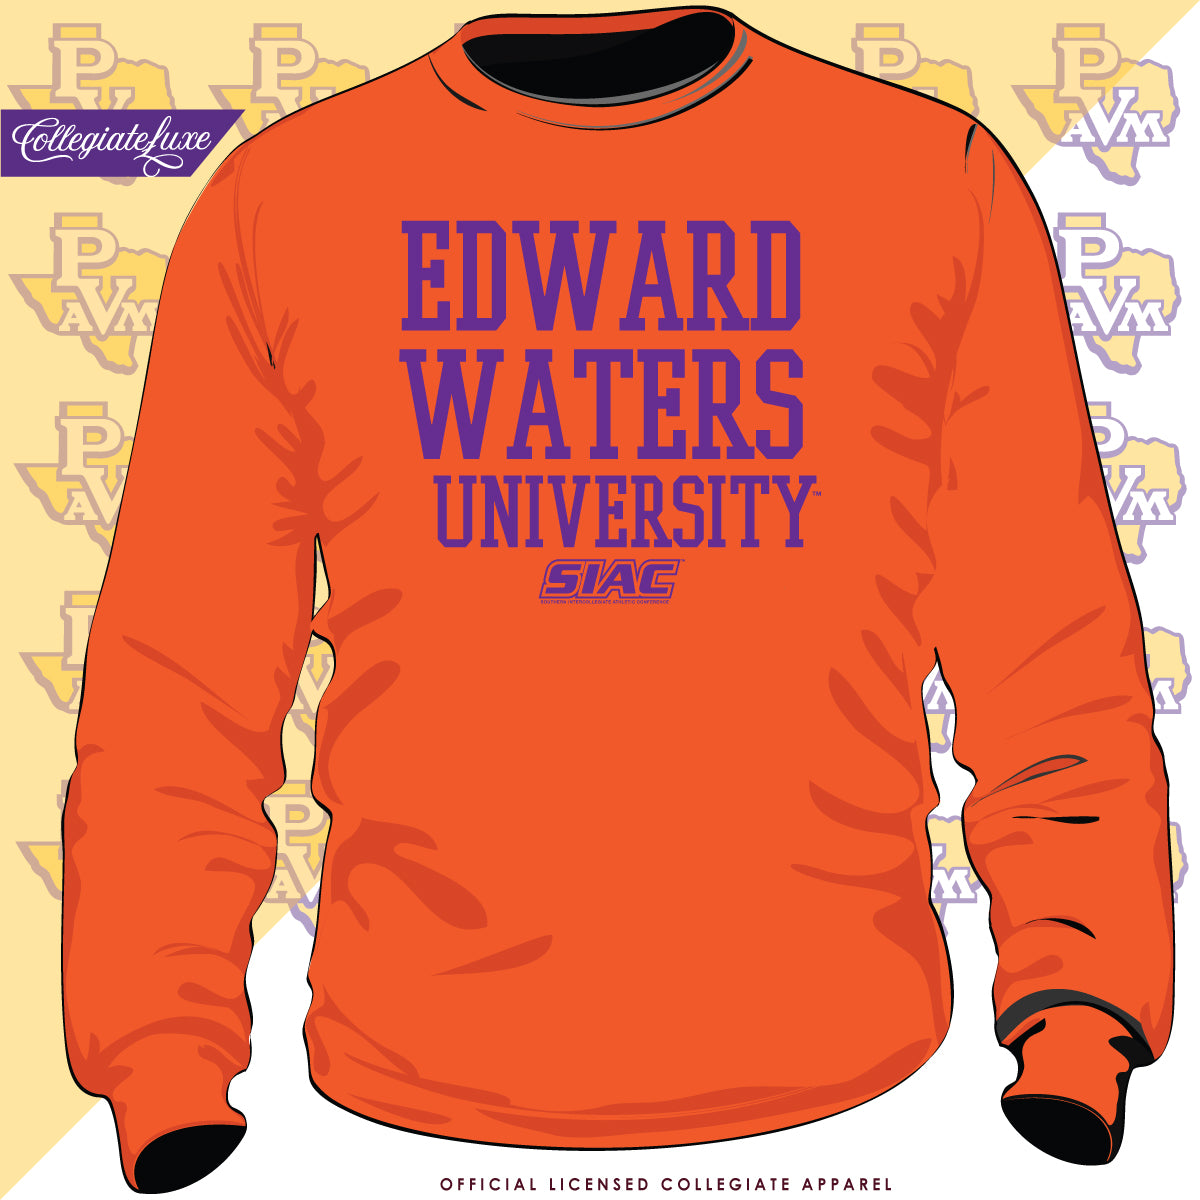 Edward Waters University | UNIV Crew | Orange Unisex Sweatshirt (Z)